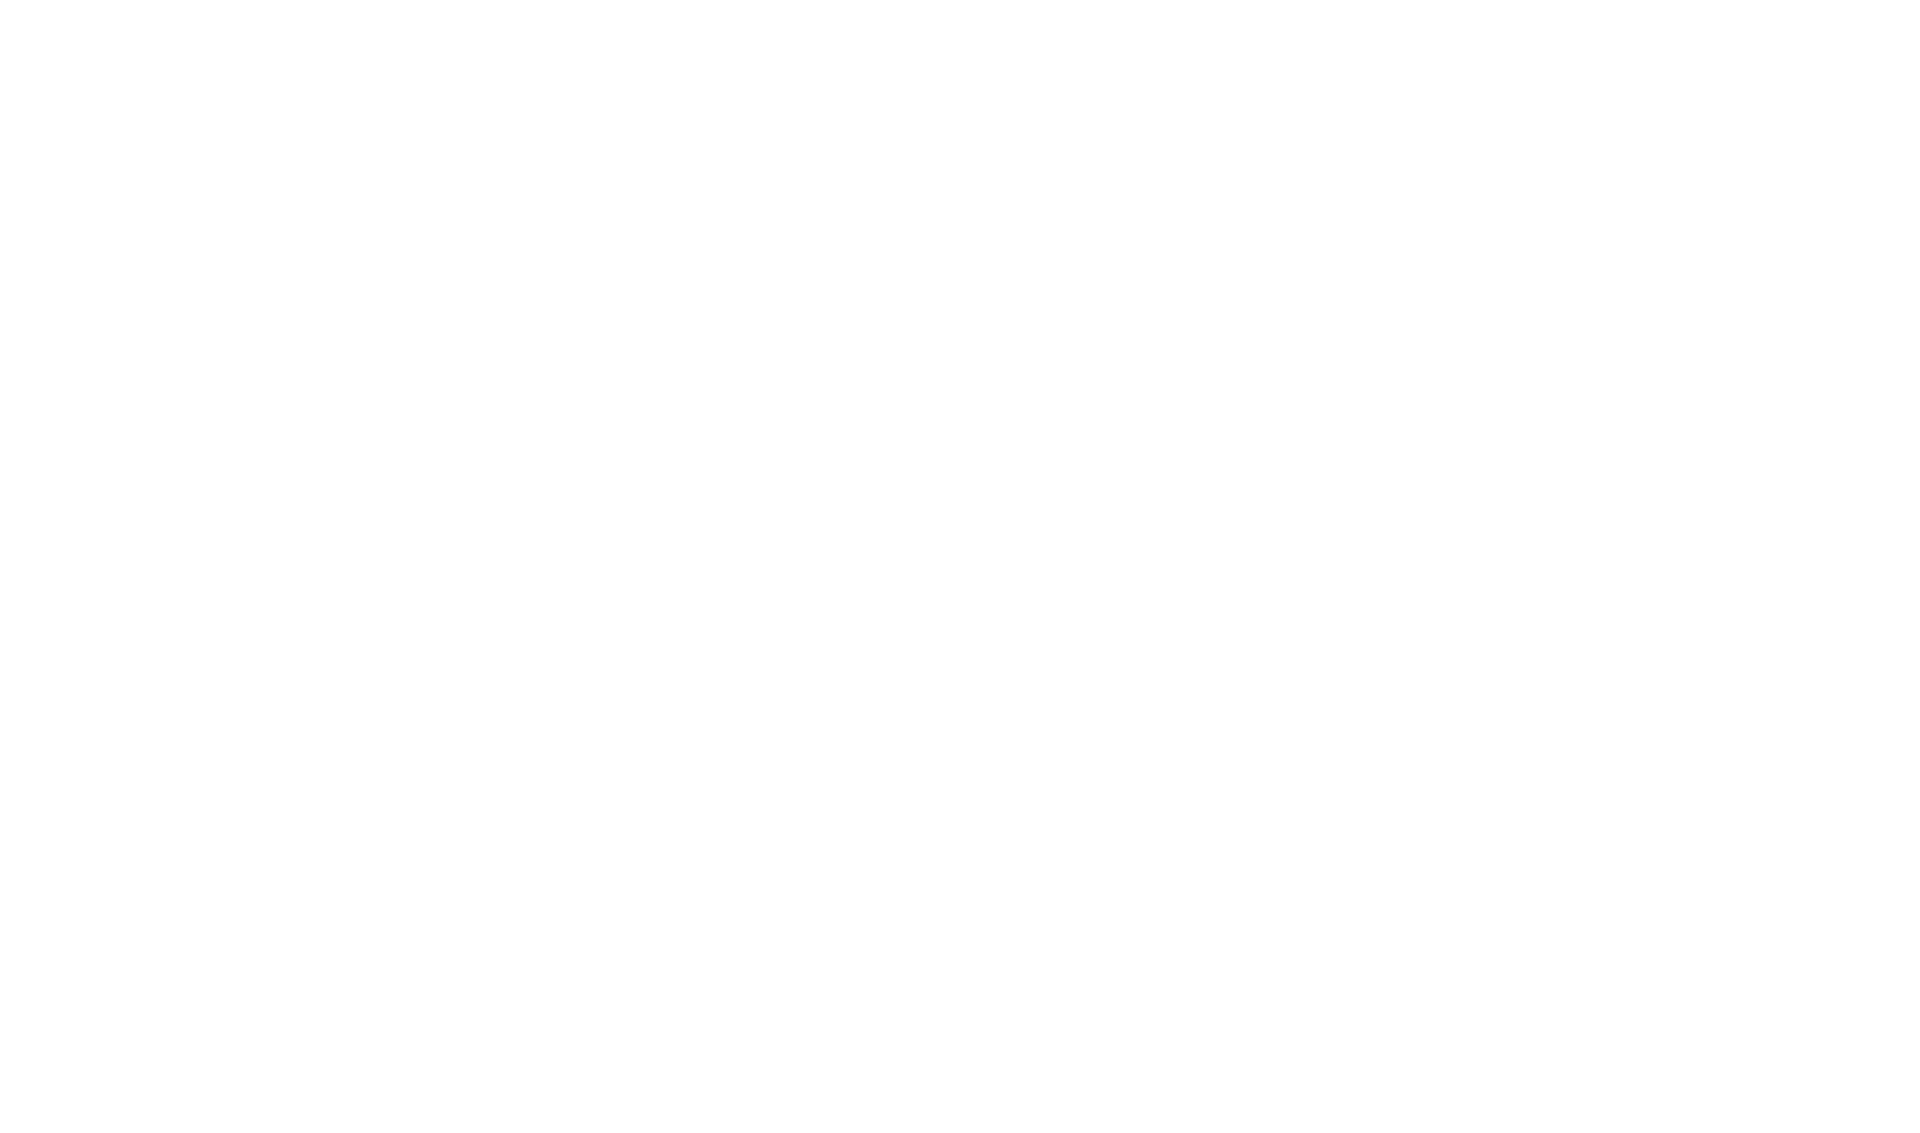 Amazon Music Logo PNG